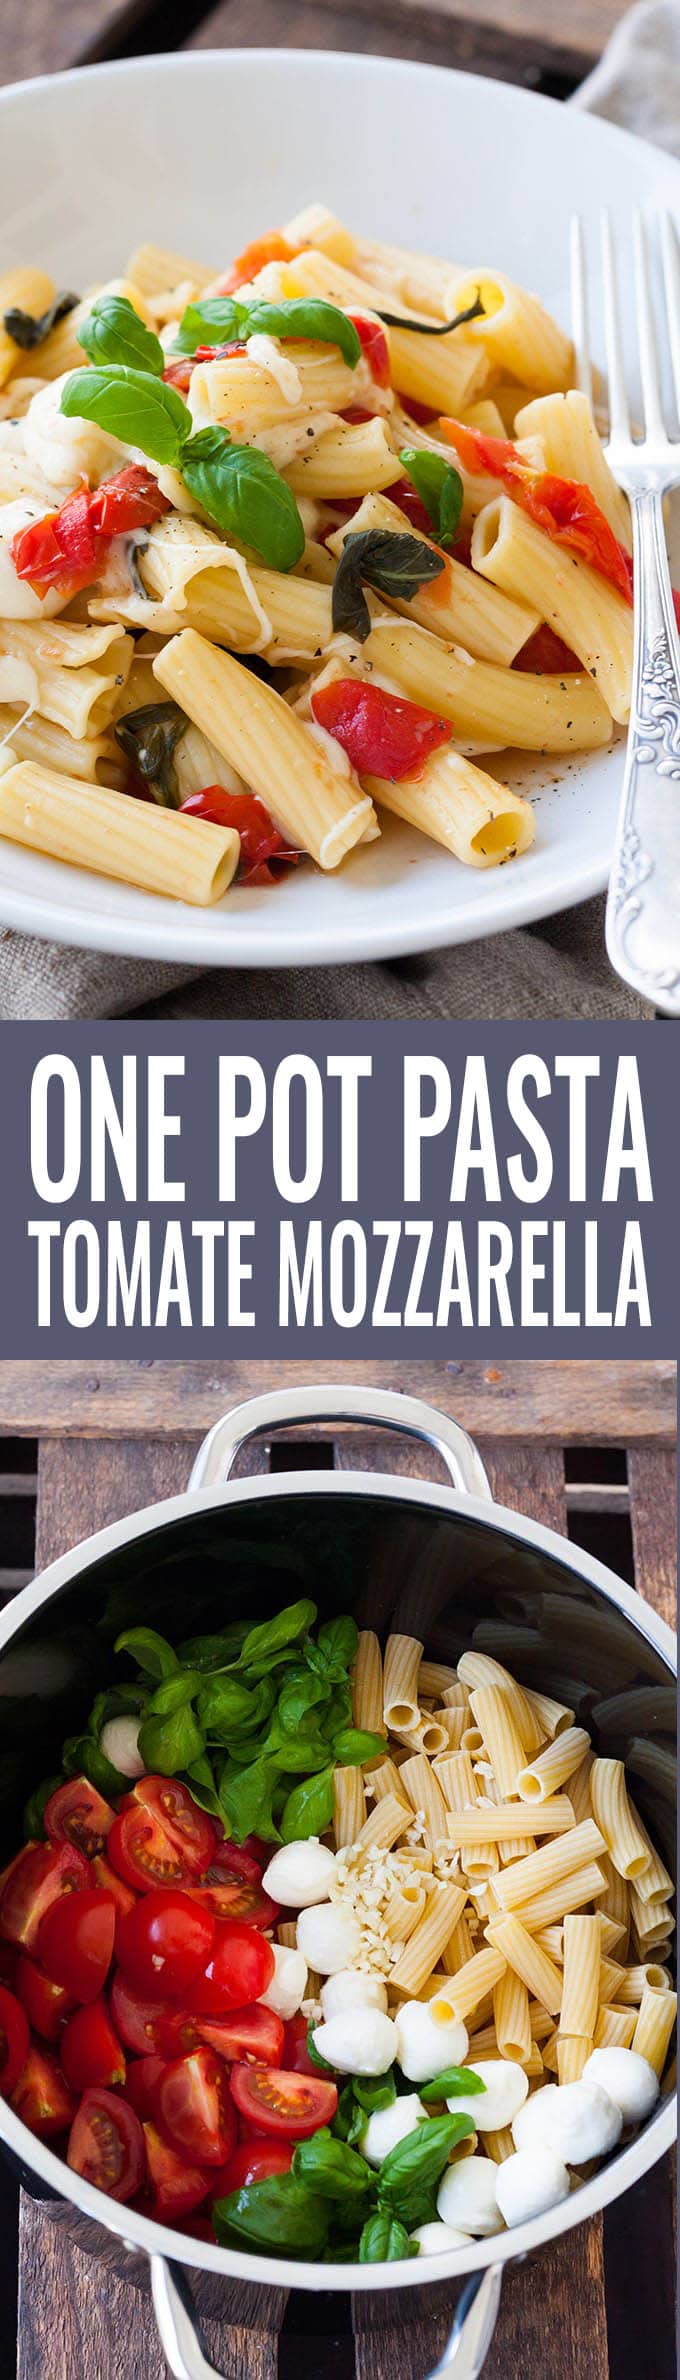 One Pot Pasta mit Tomaten und Mozzarella